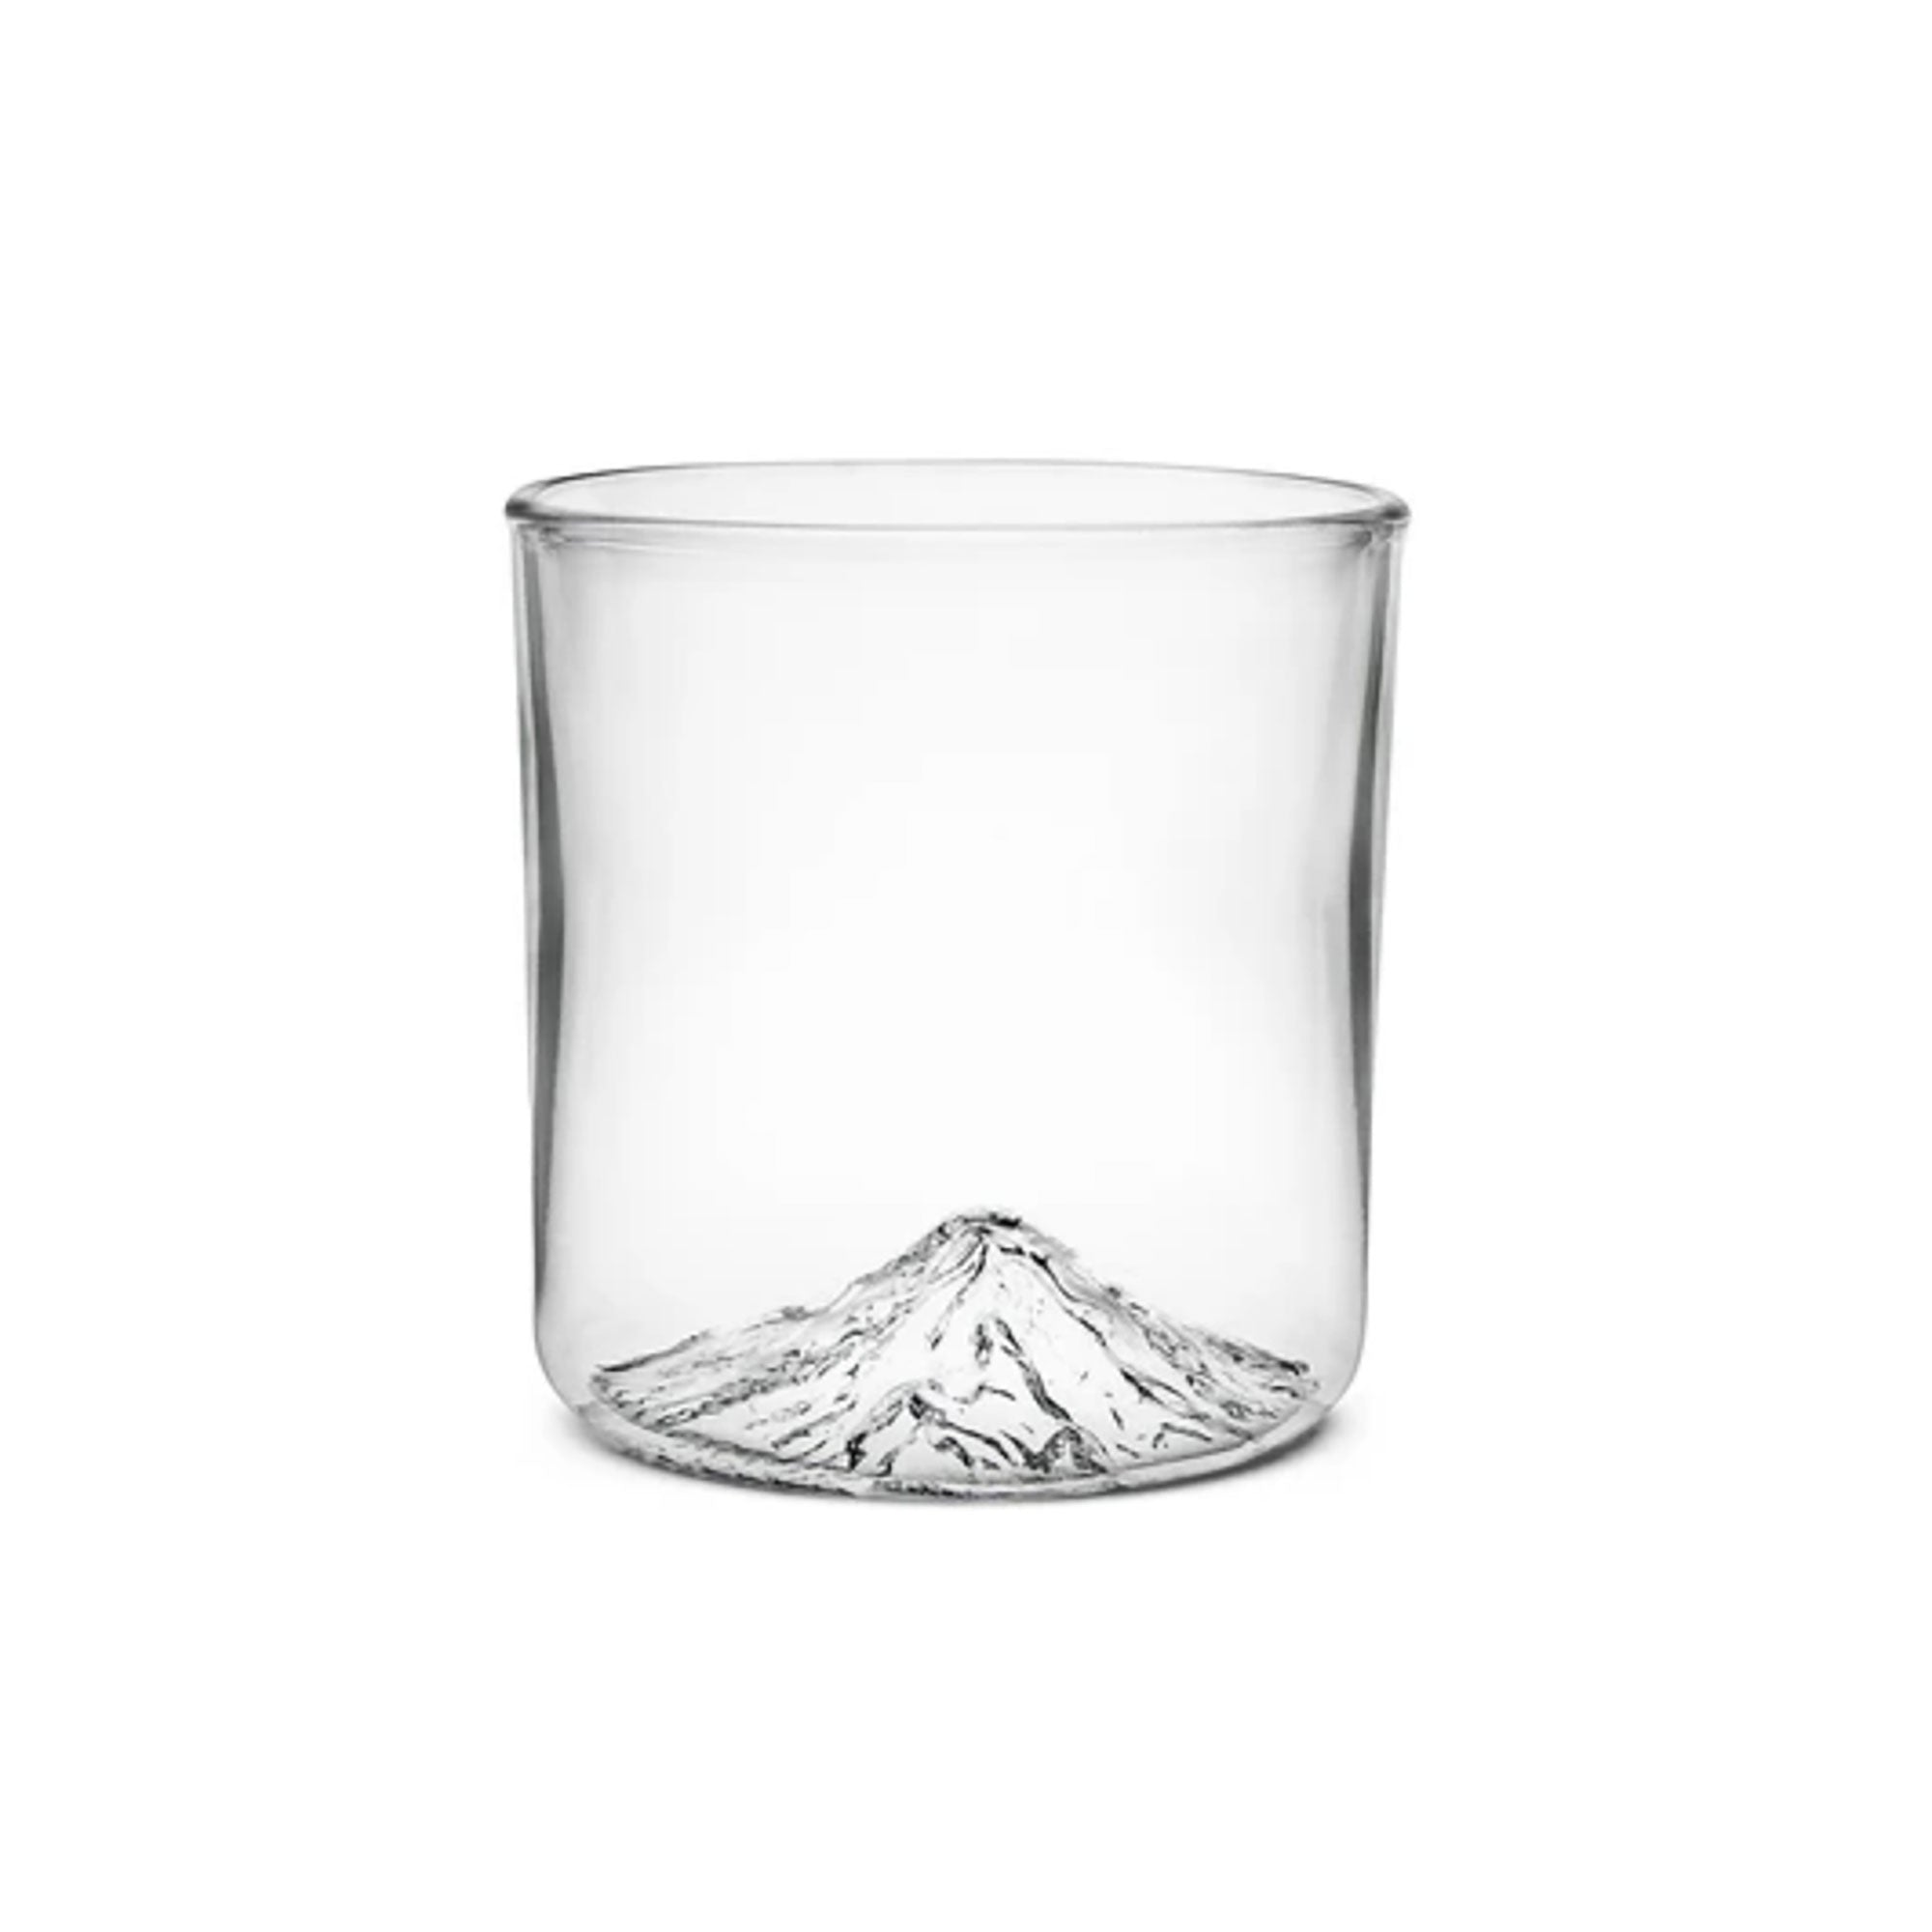 North Drinkware- Mt. Rainier Tumbler- 8 oz